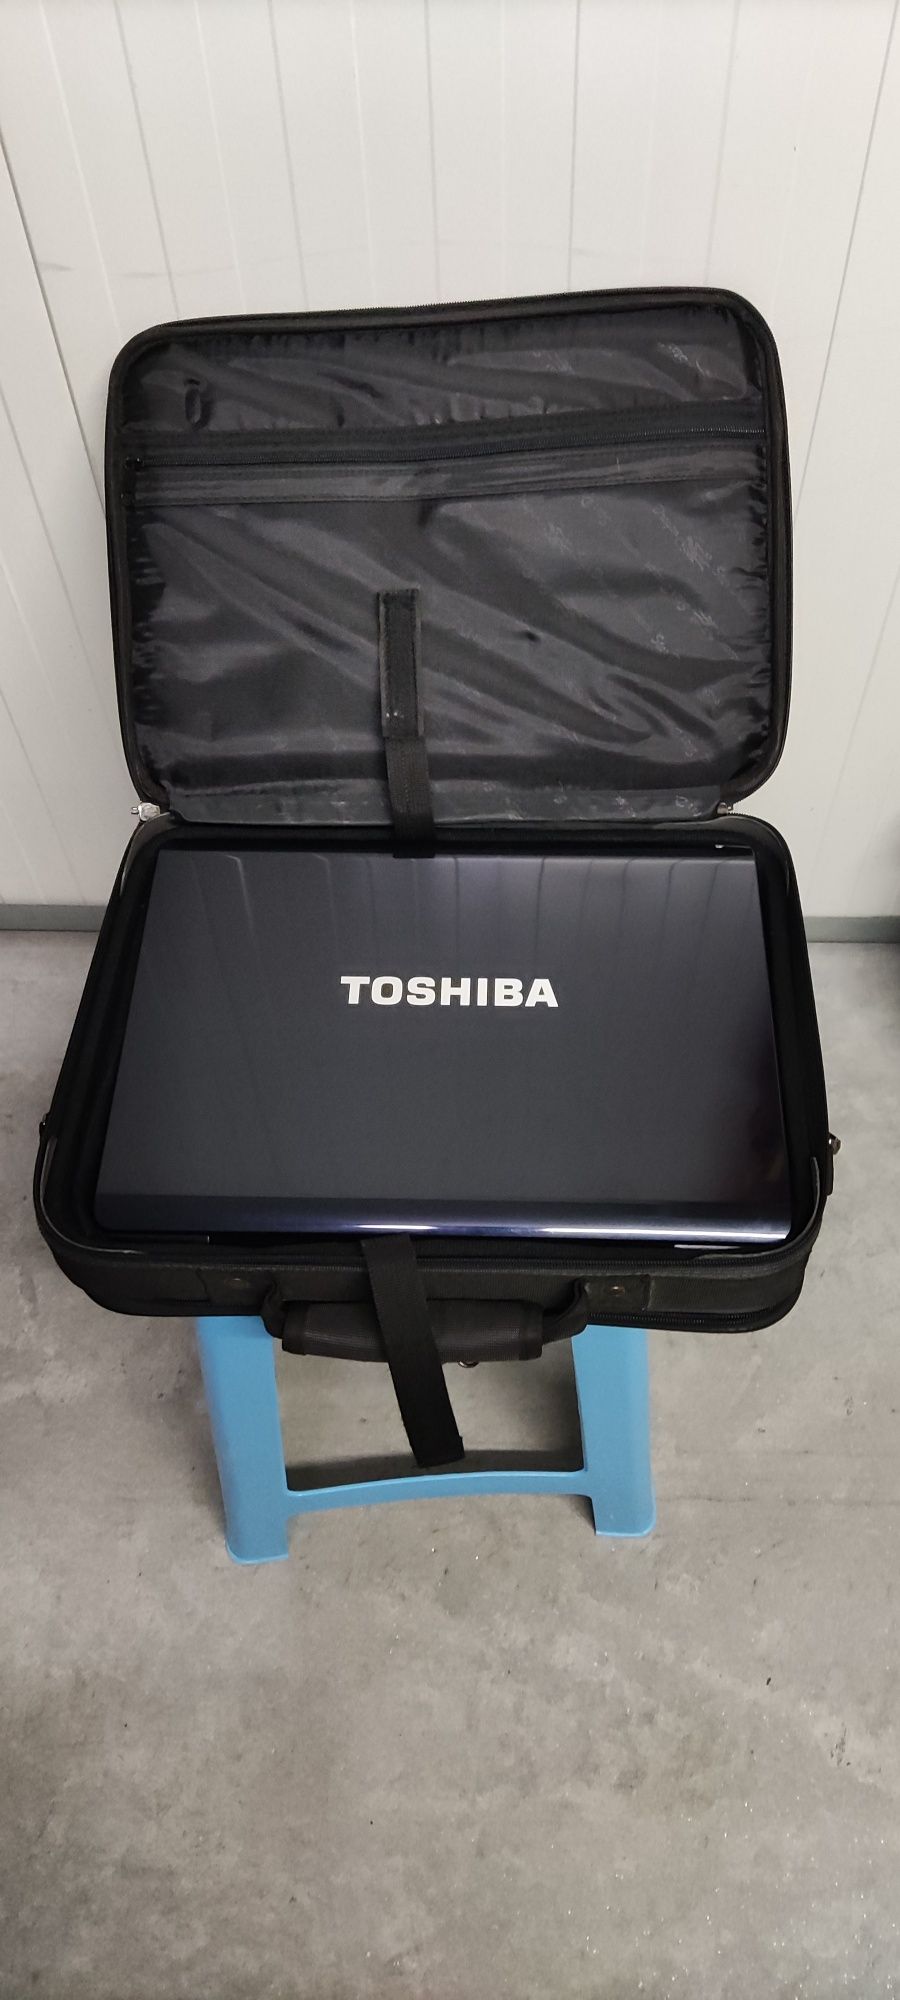 Portátil Toshiba com mala